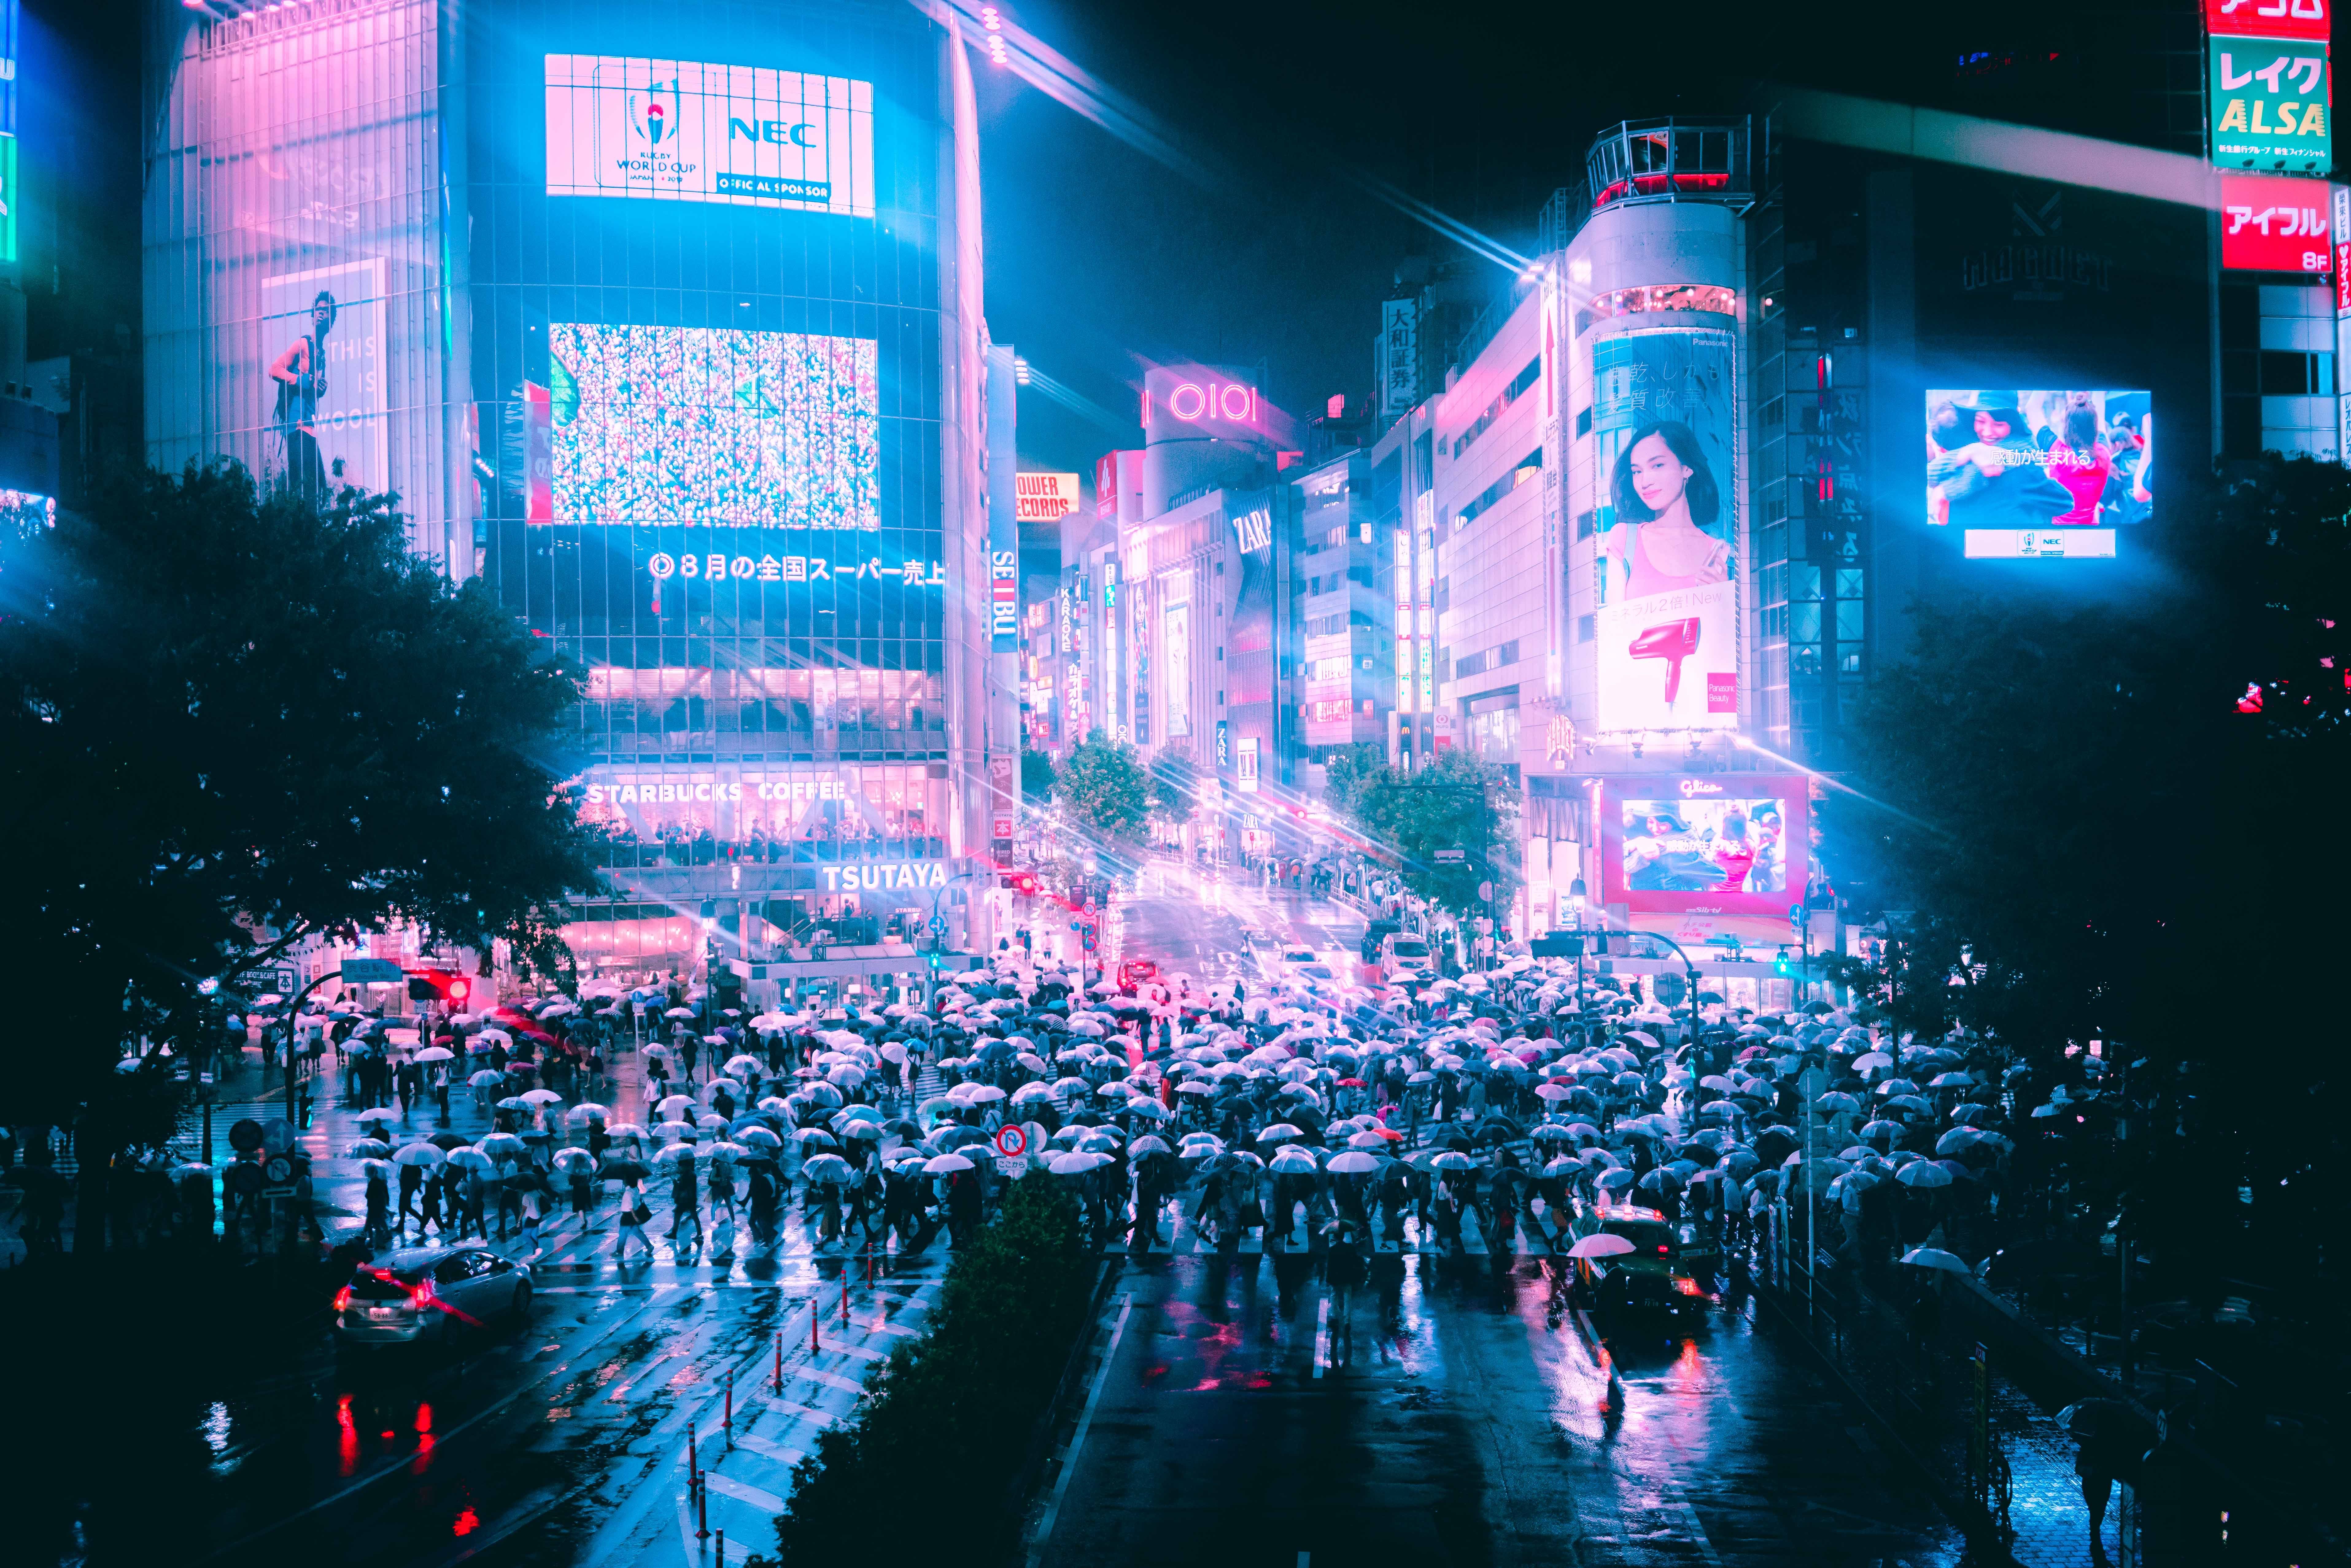 7660x5109 #umbrella, #tokyo, #neon, #crowd, #manga, #cyberpunk, #Creative Commons image, #street, #city, #rain, #bright, #japan, #urban, #weather, #night, #asium, #anime. Mocah HD Wallpaper